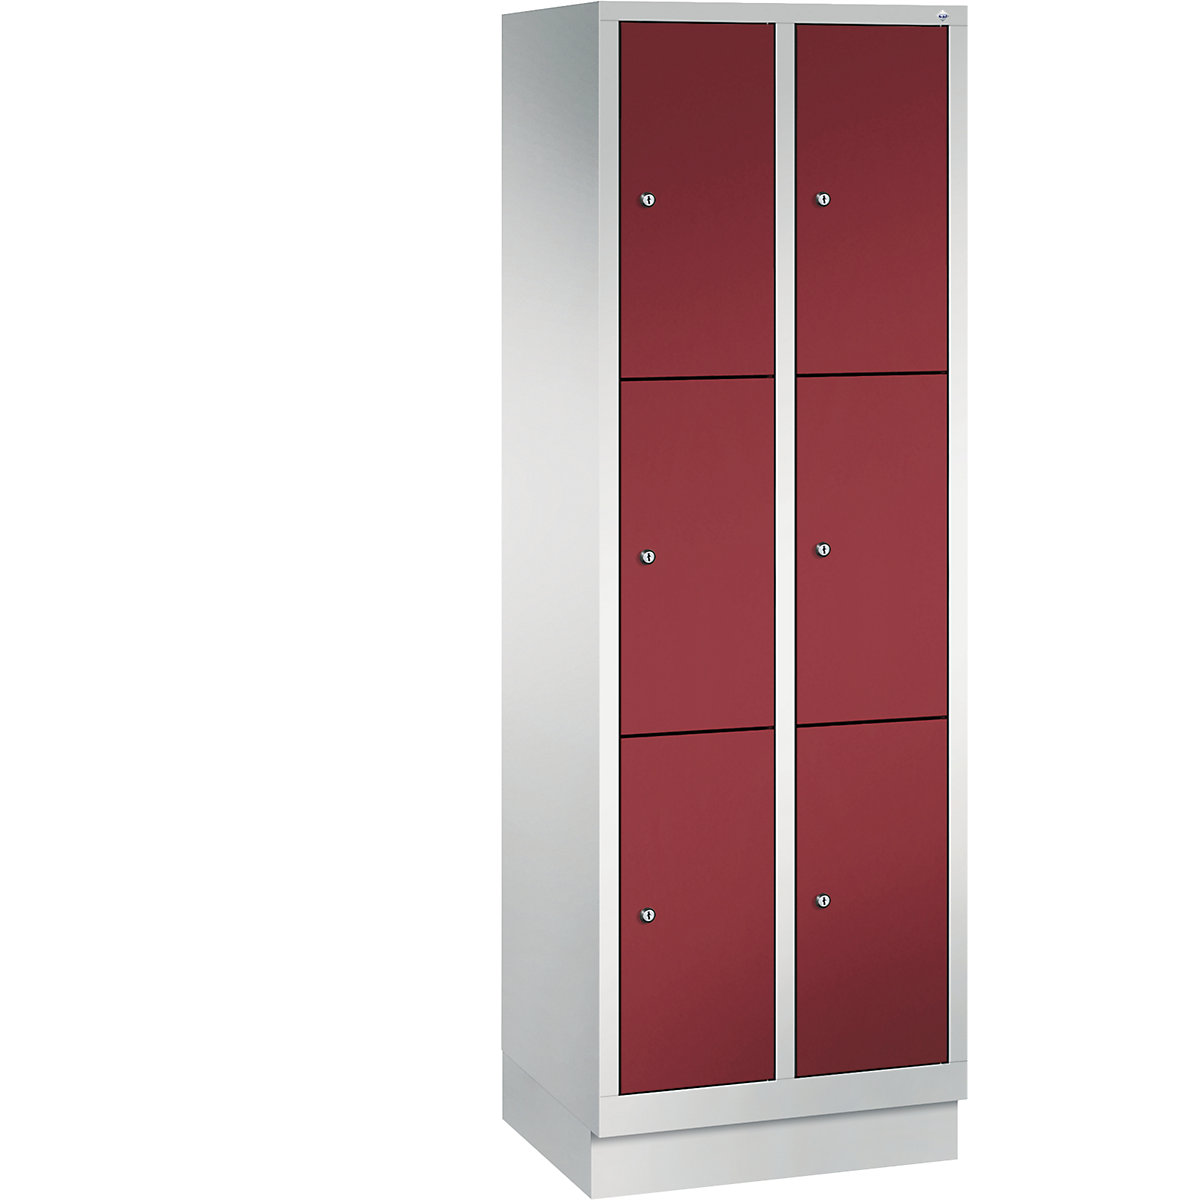 CLASSIC locker unit with plinth – C+P, 2 compartments, 3 shelf compartments each, compartment width 300 mm, light grey / ruby red-13